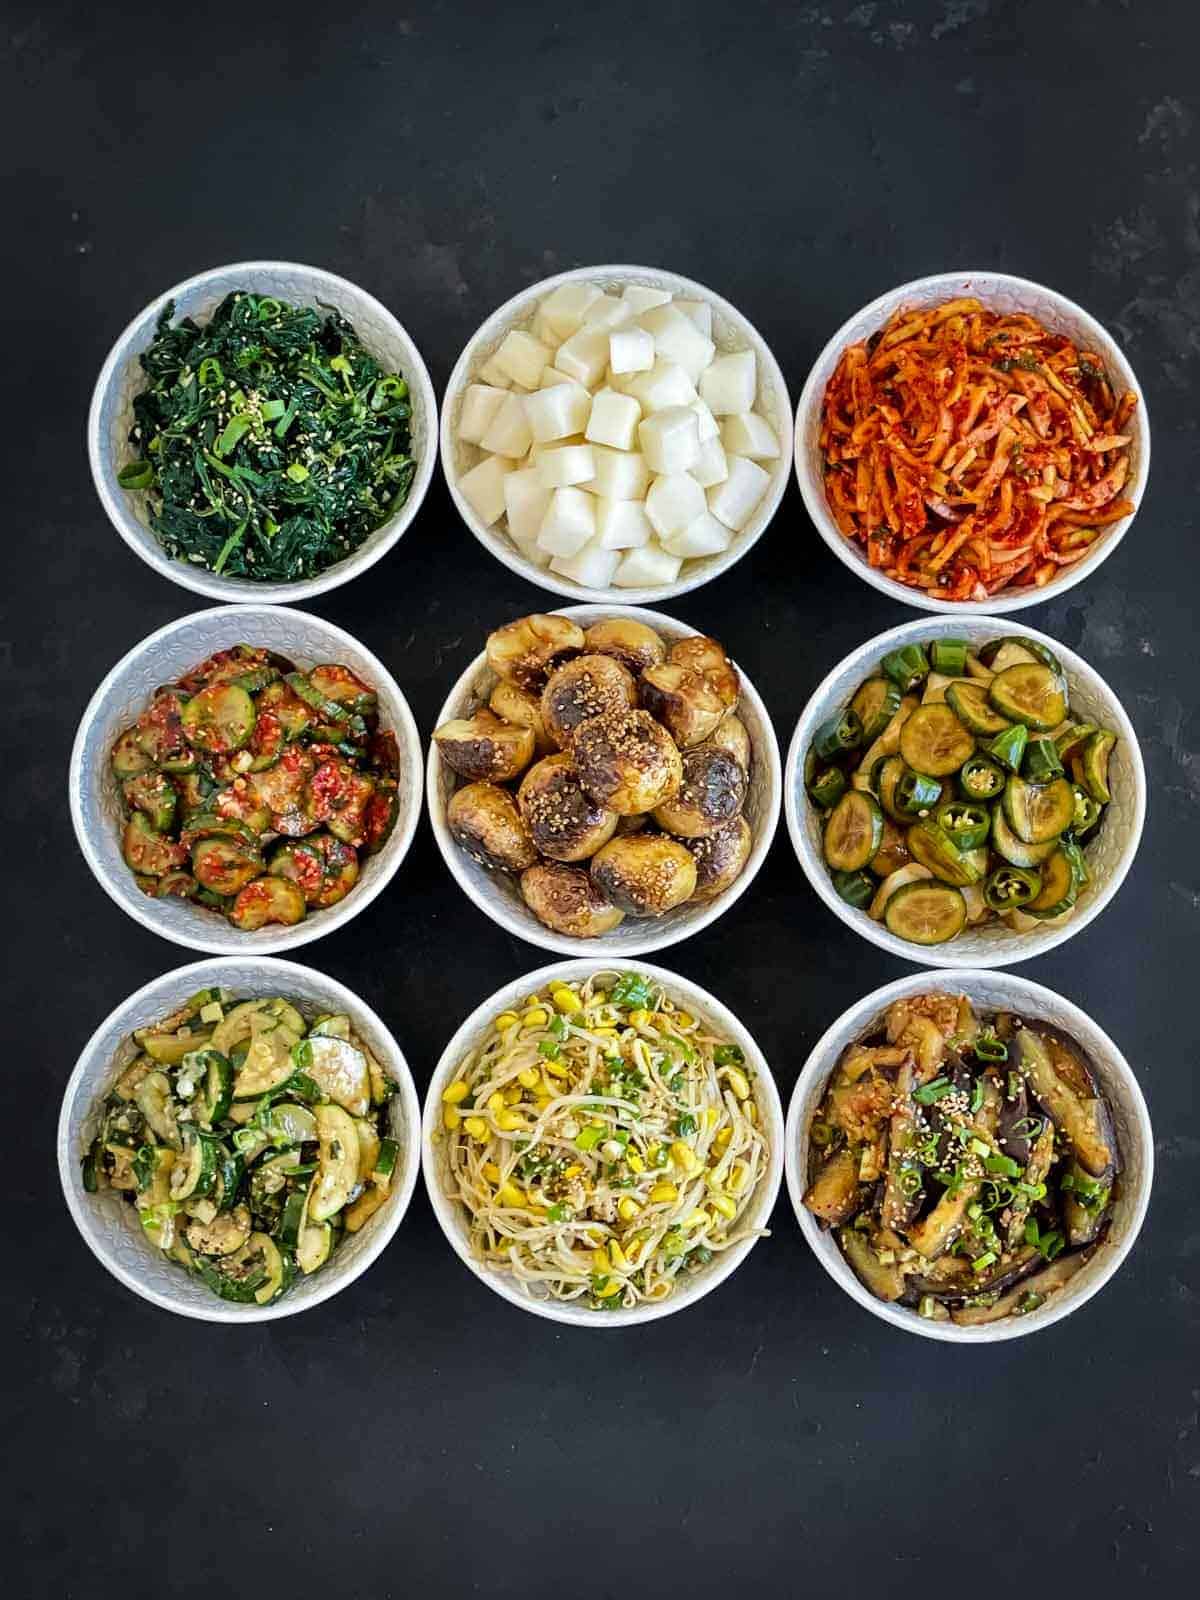 Korean Side Dishes Recipes - Banchan